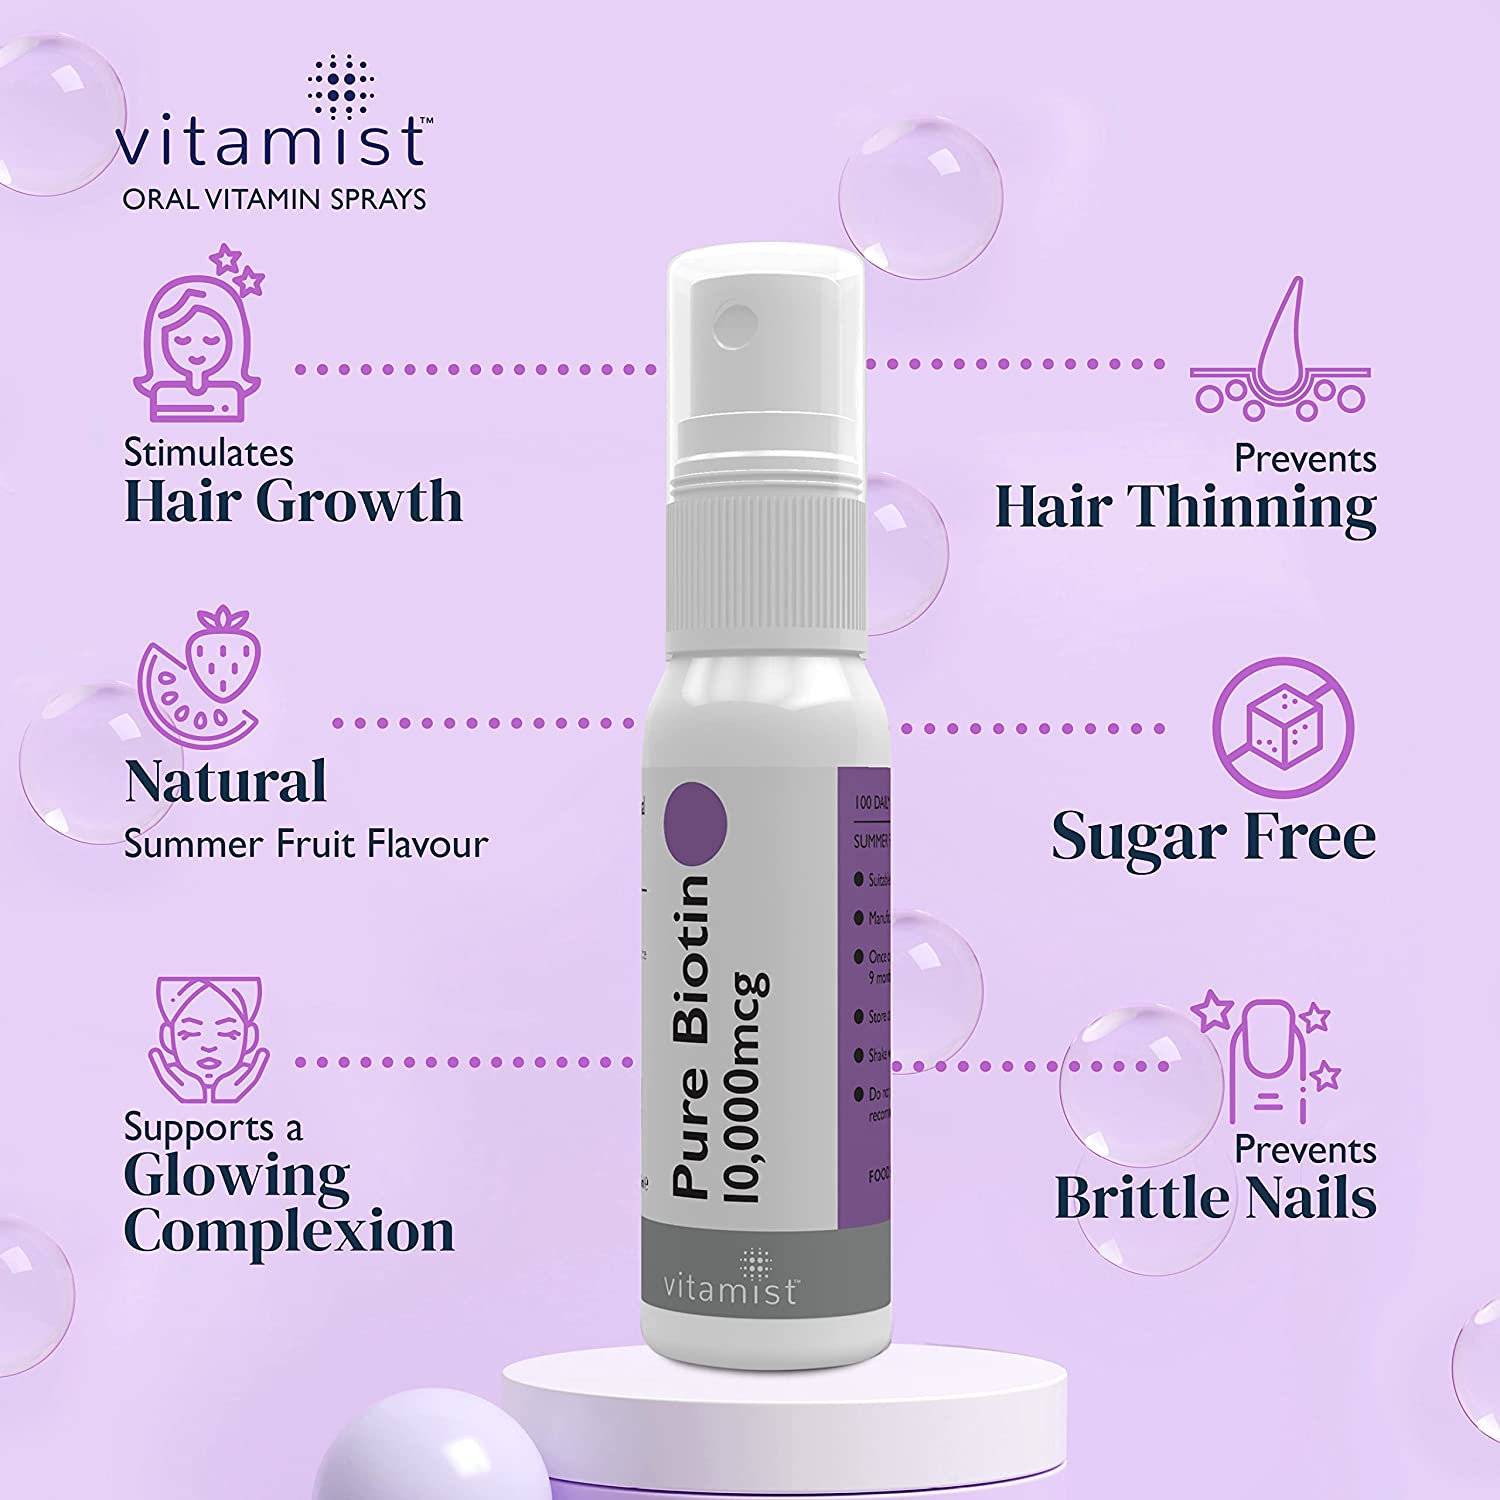 Vitamist Pure Biotin Hair Growth Supplement 10,000mcg